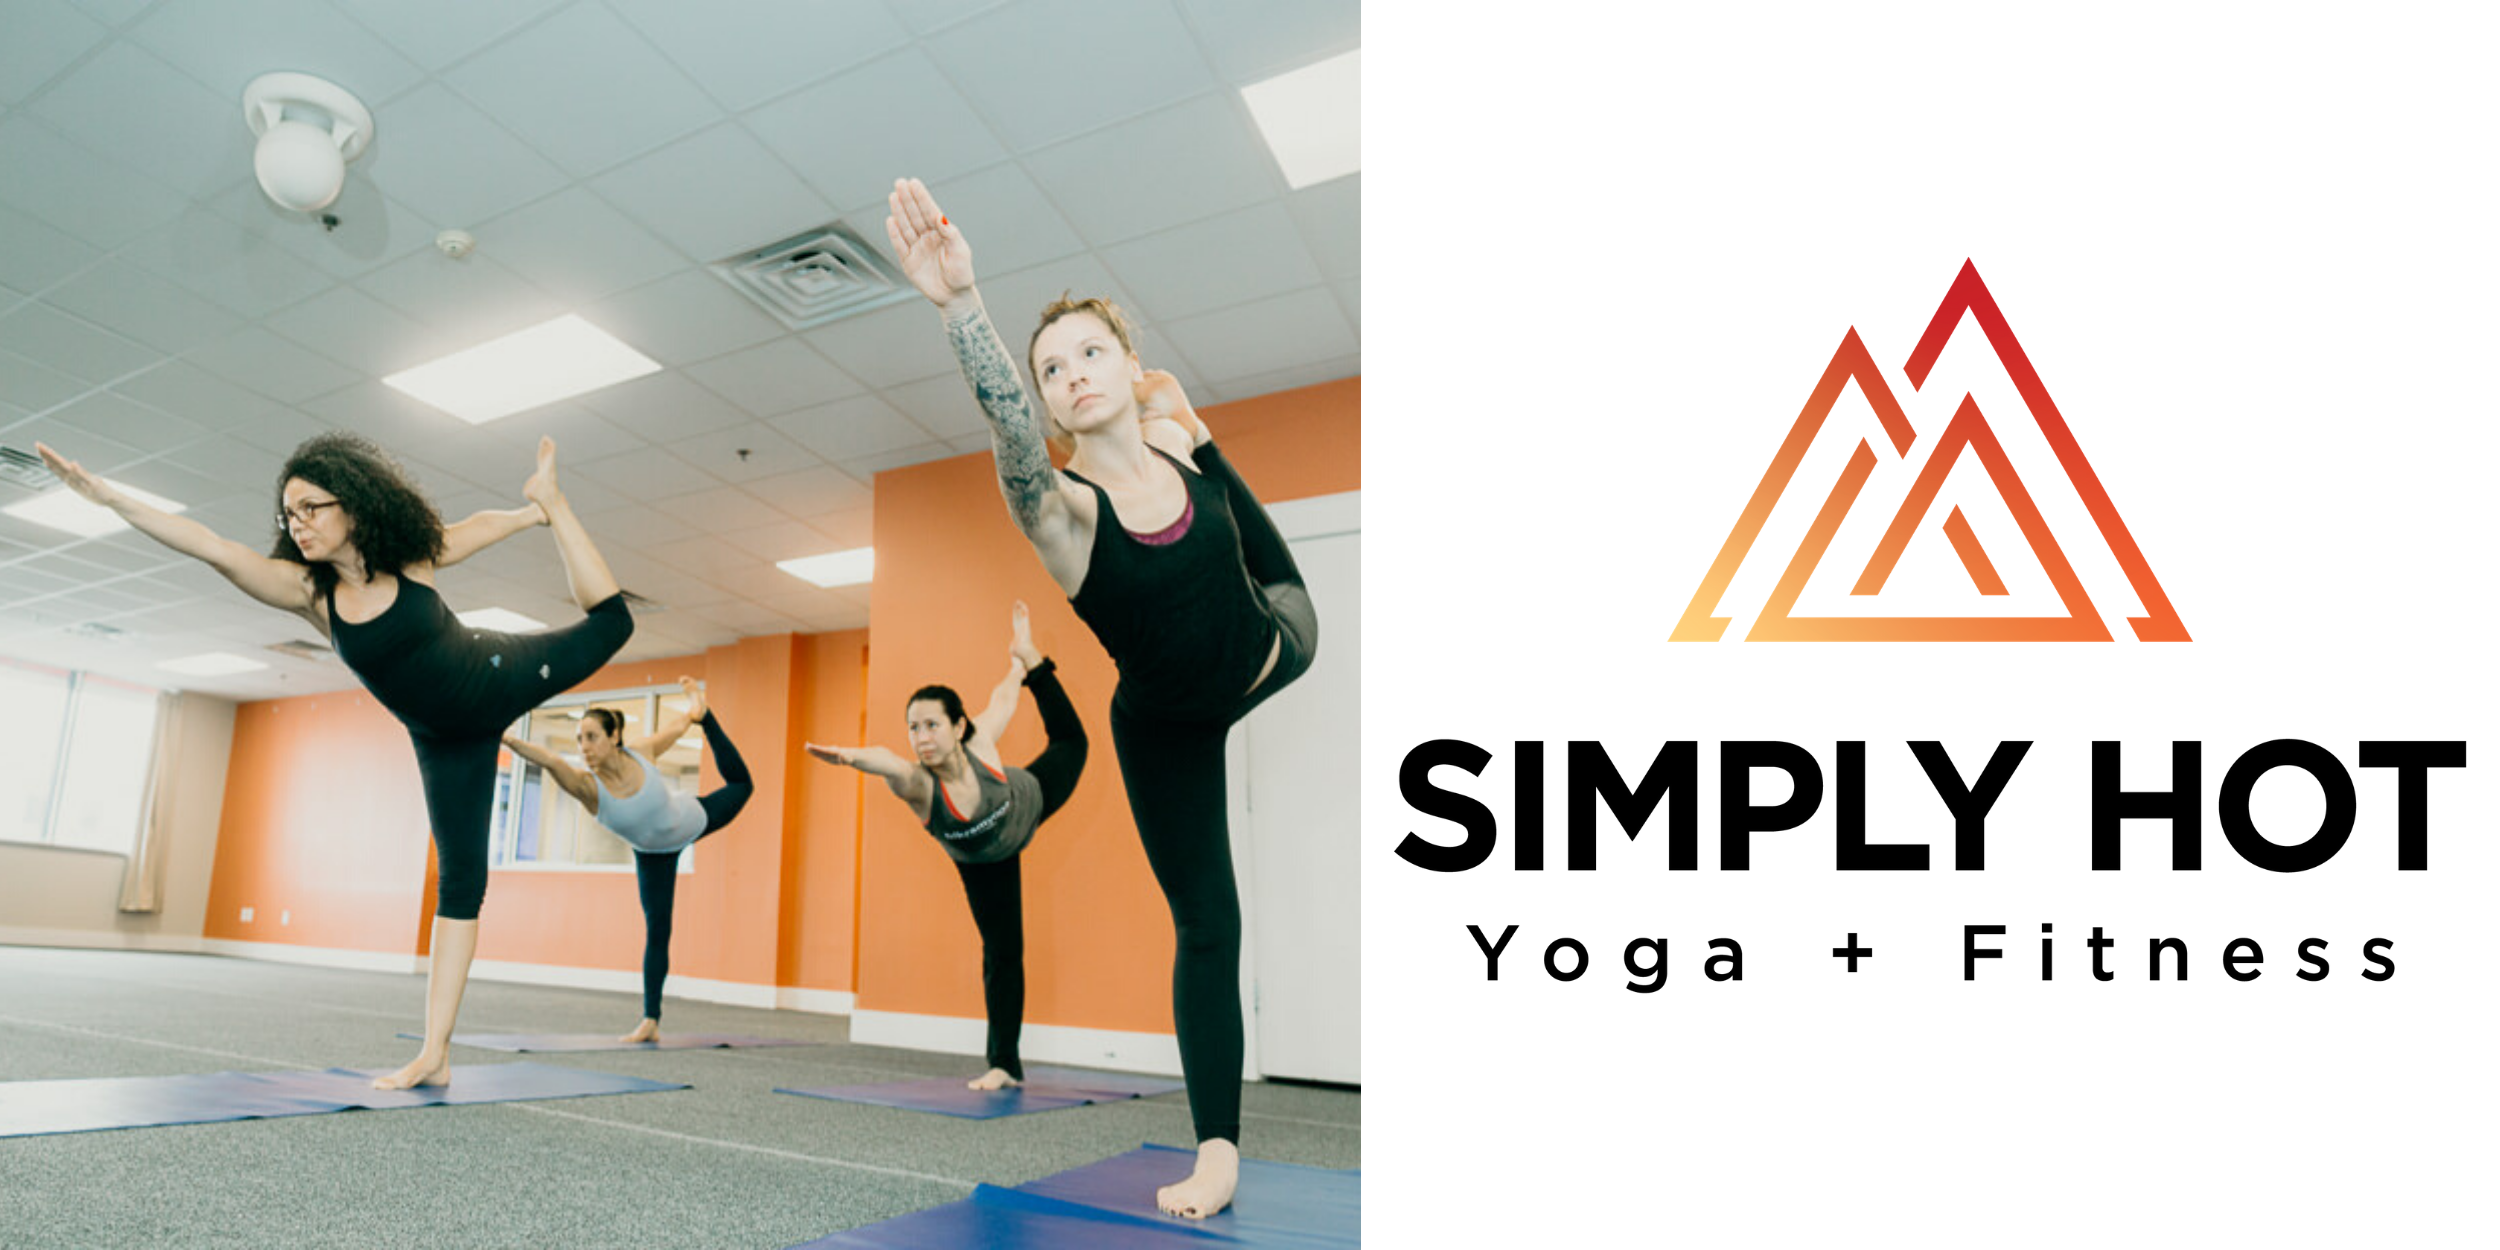 Simply Hot Yoga + Fitness  Palisades Park, NJ hot yoga studio